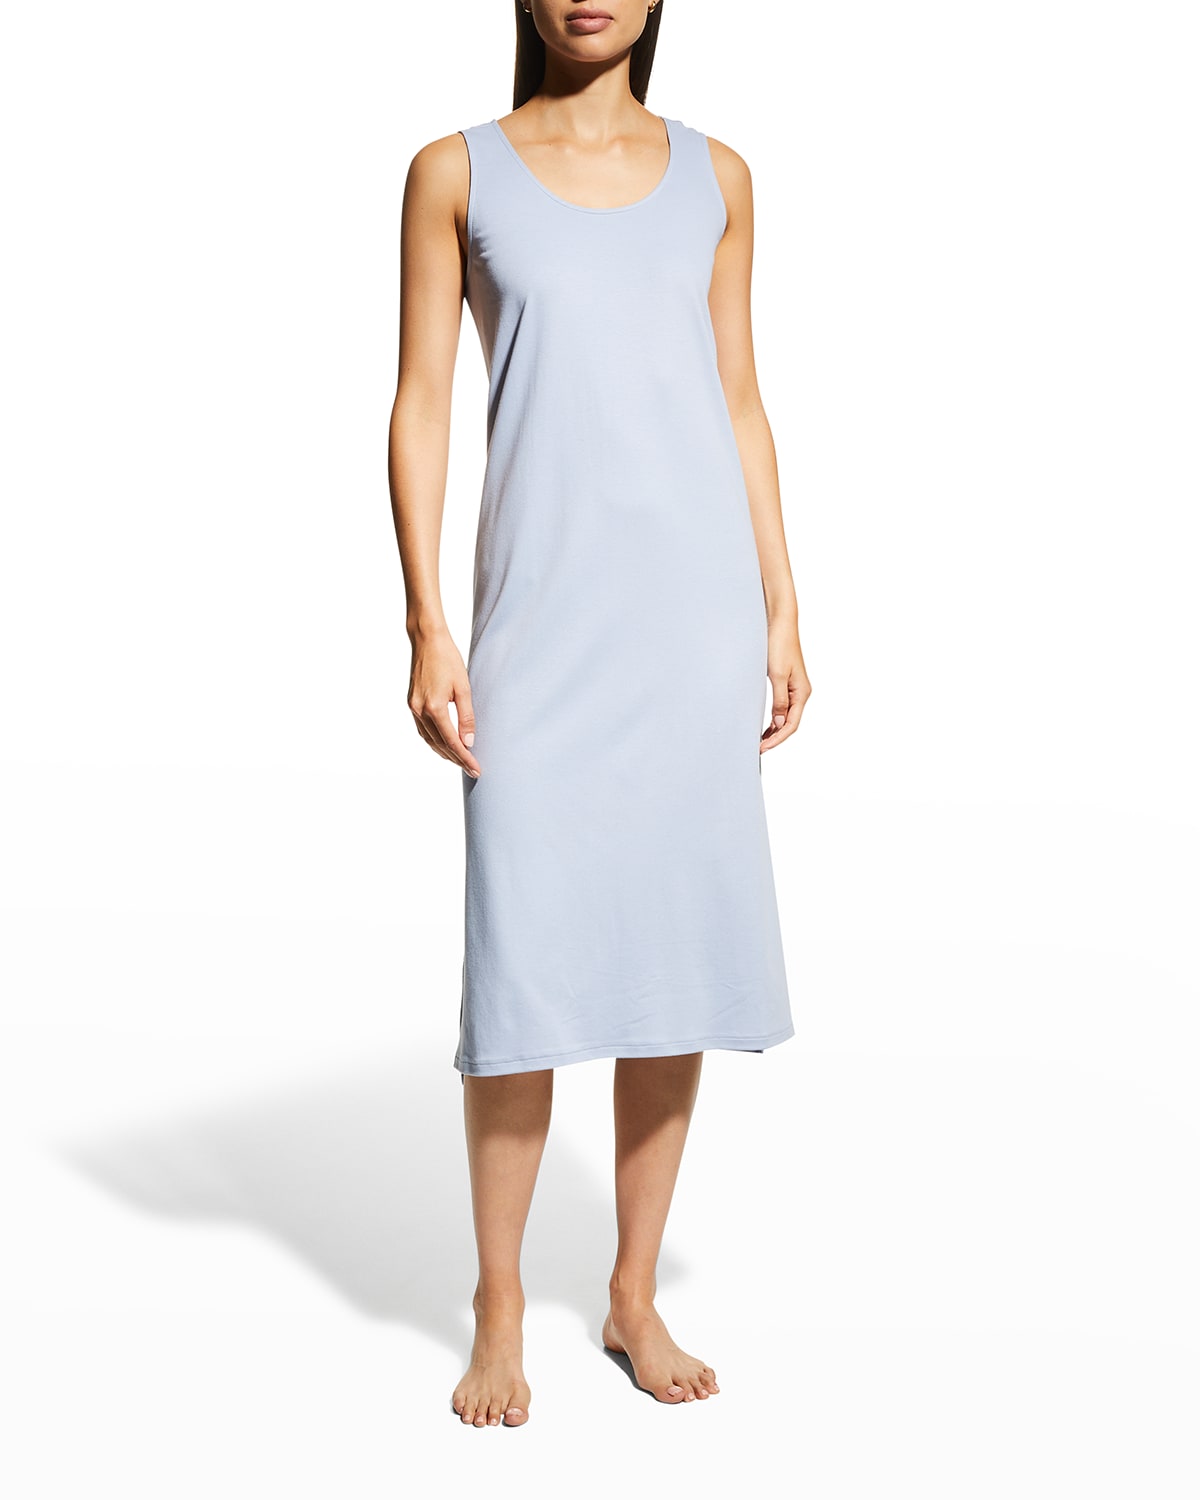 Eileen Fisher The Nap Organic Cotton Dress